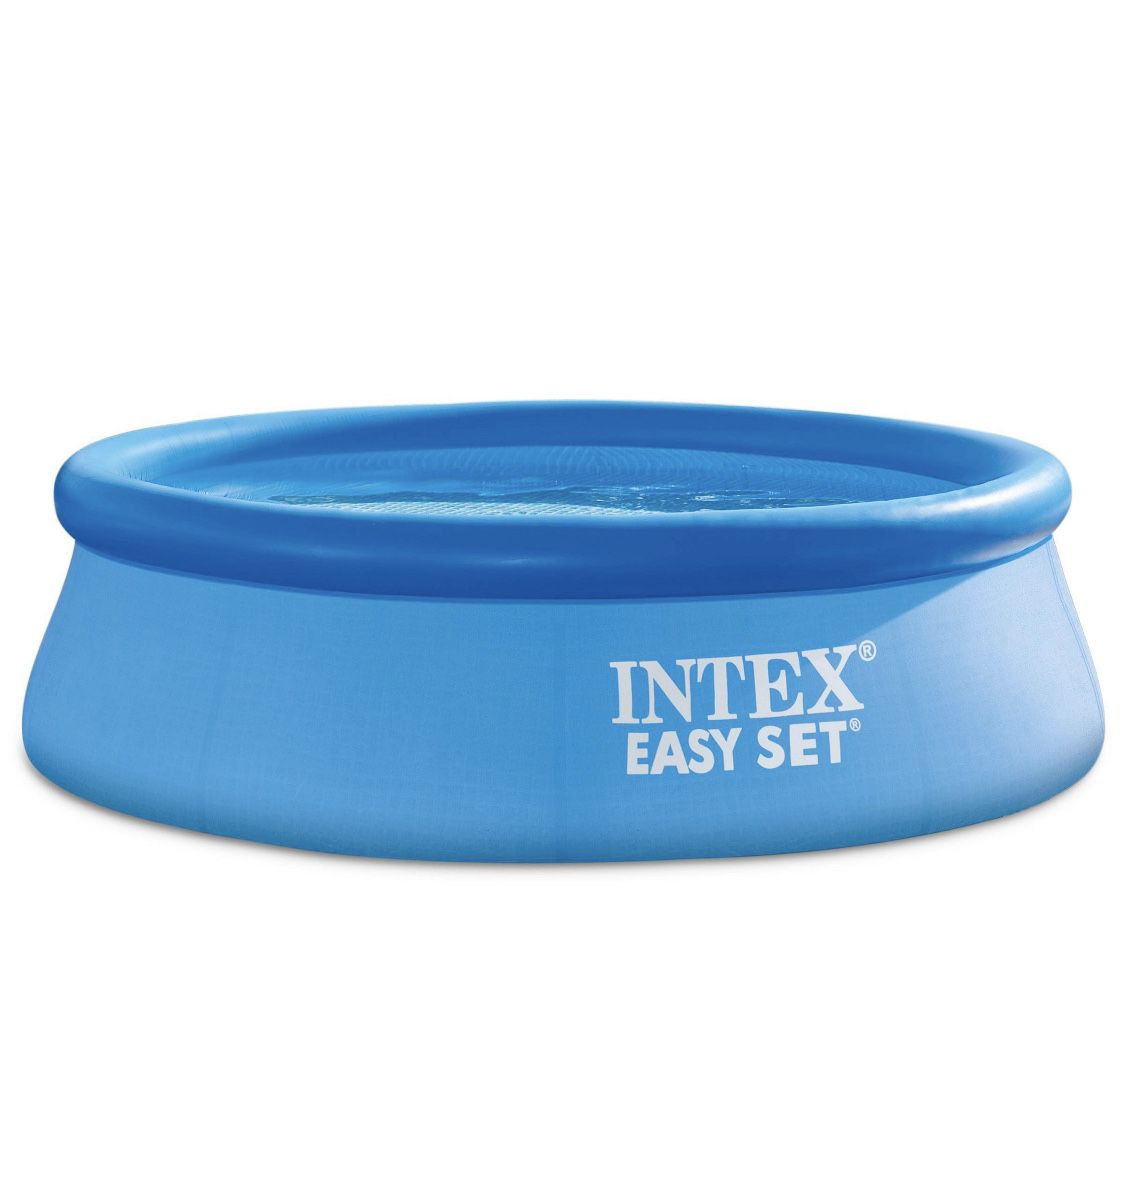 Intex 8’ x 30” Easy Set Round Inflatable Pool